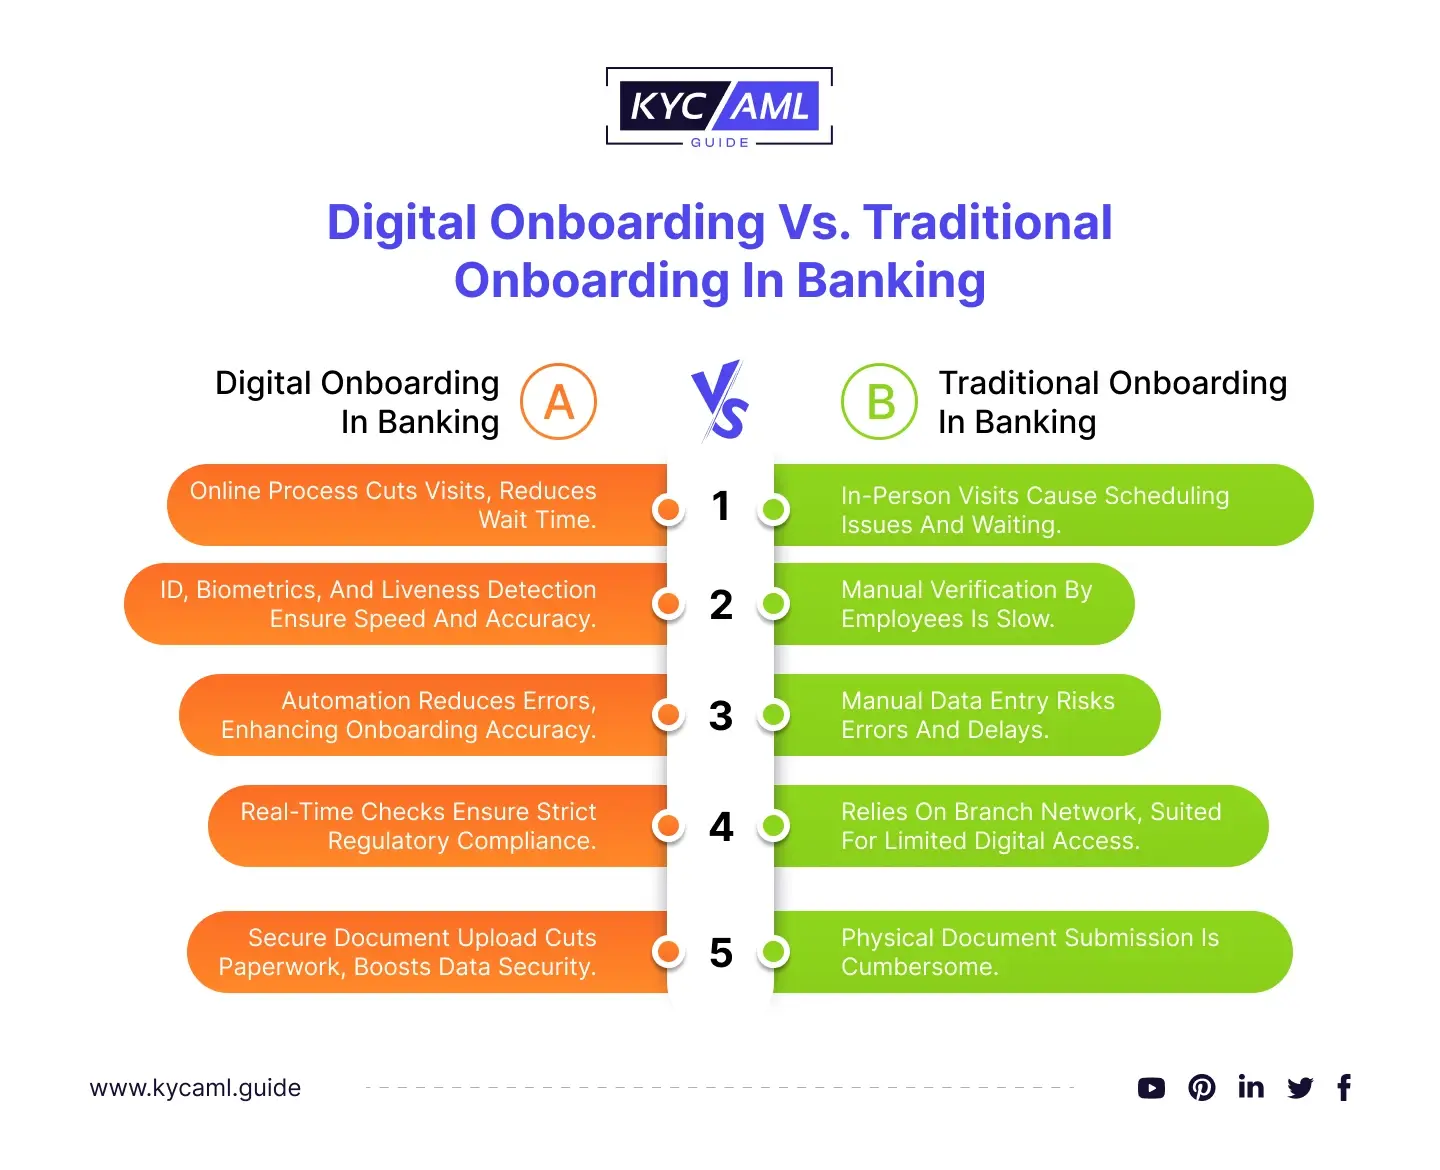 Digital Onboarding vs. Traditional Onboarding in Banking